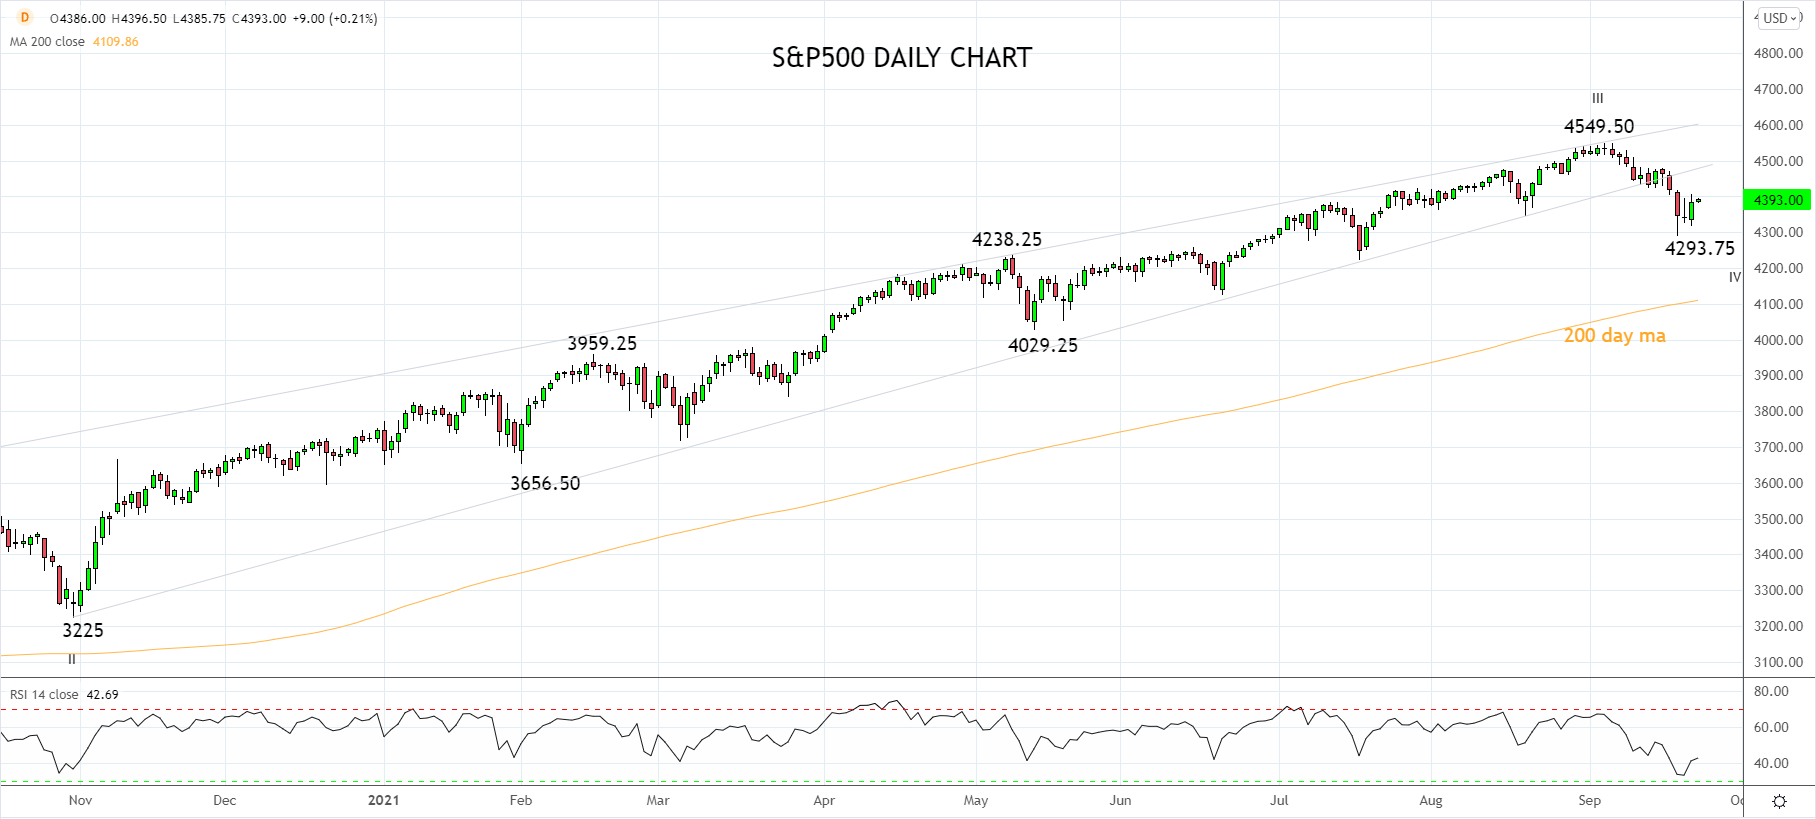 S&P500 Daily chart